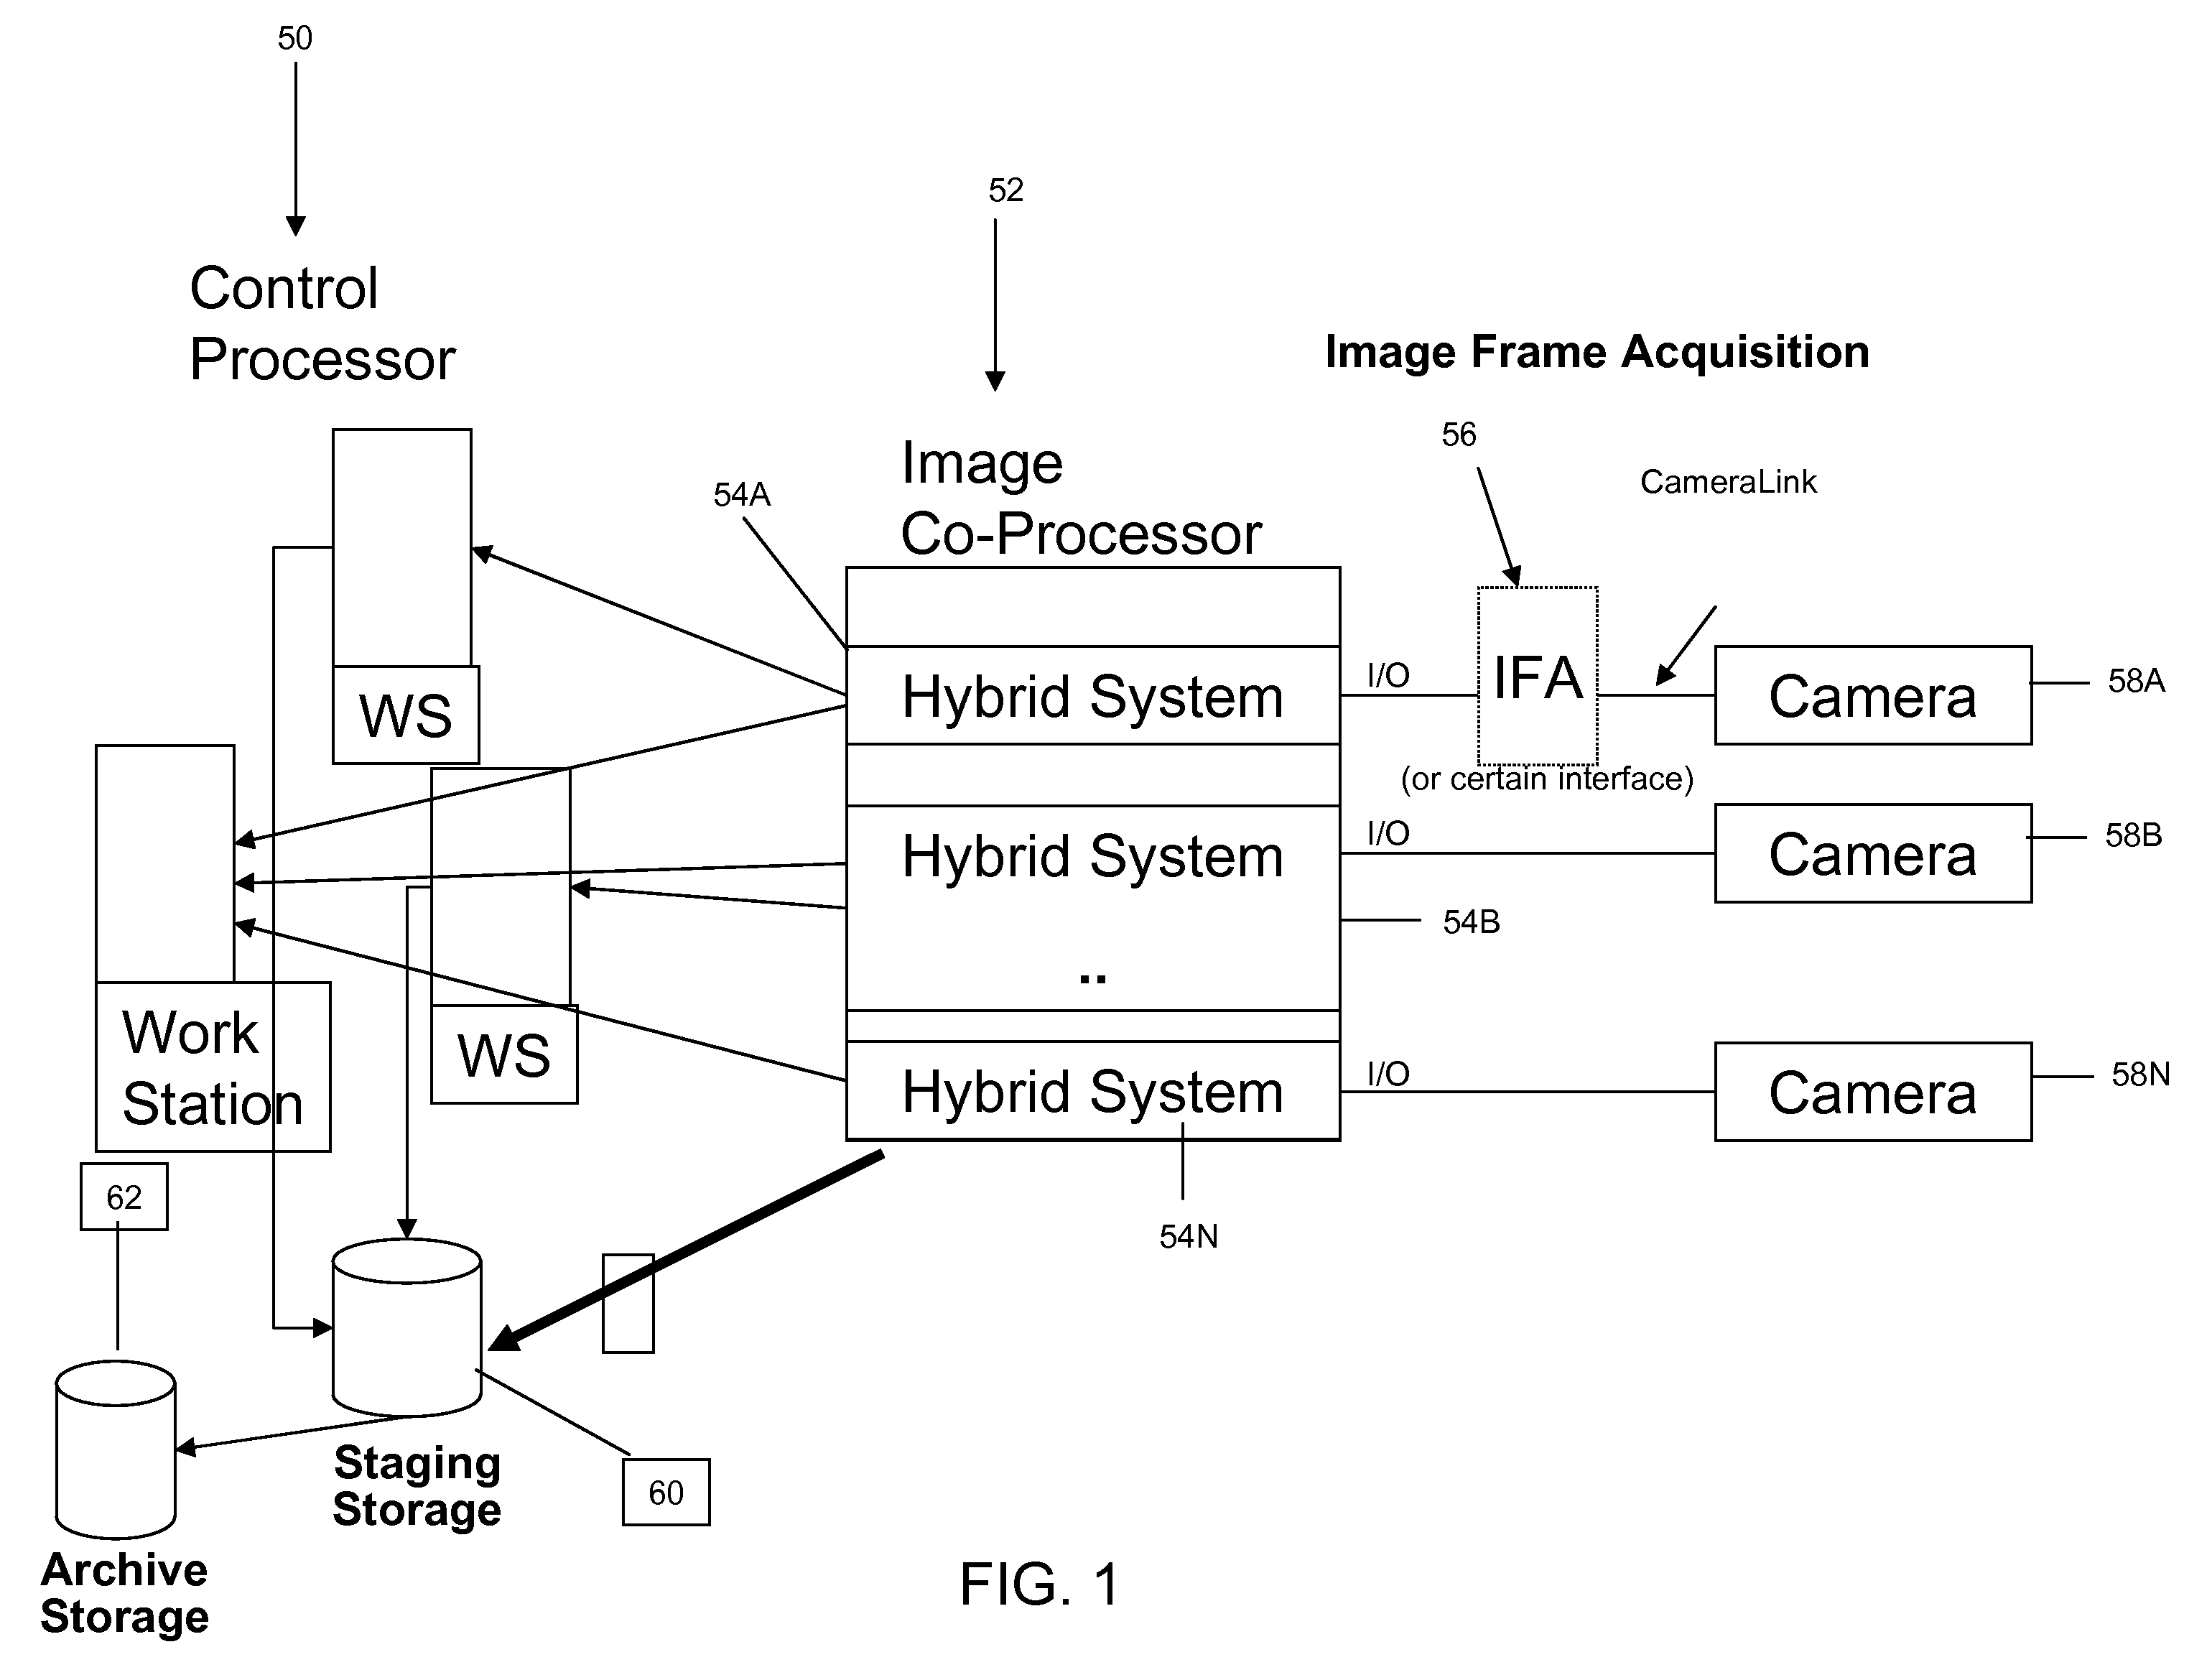 Hybrid image processing system